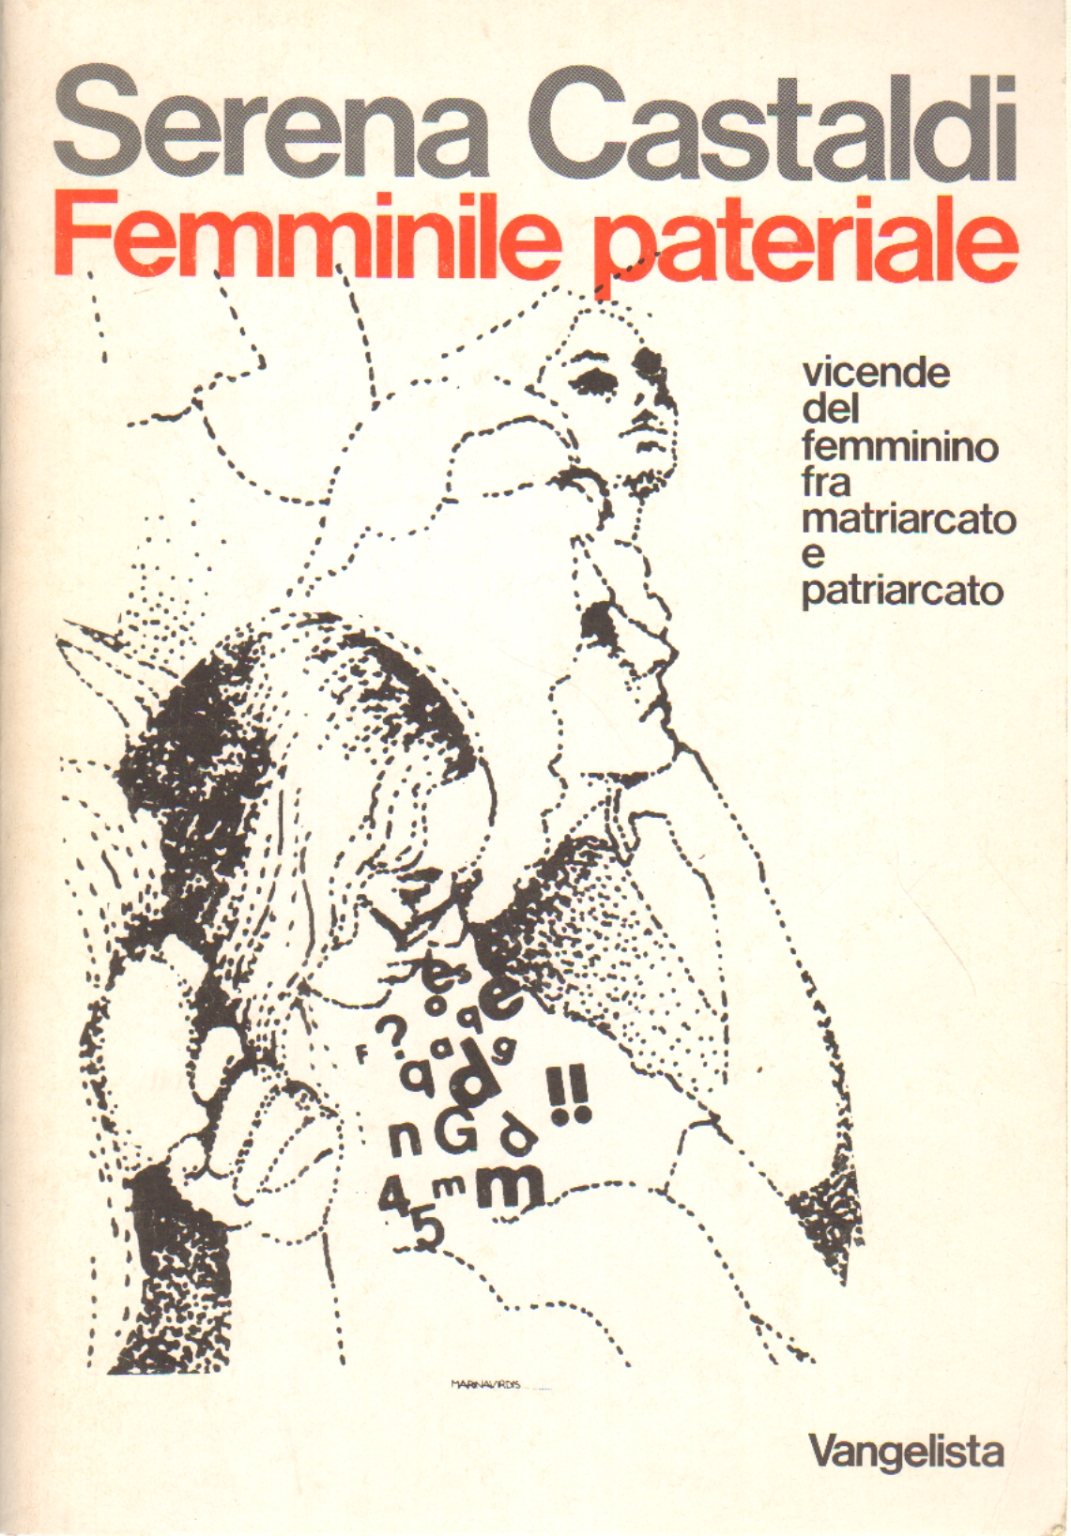 Female pateriale, Serena Castaldi